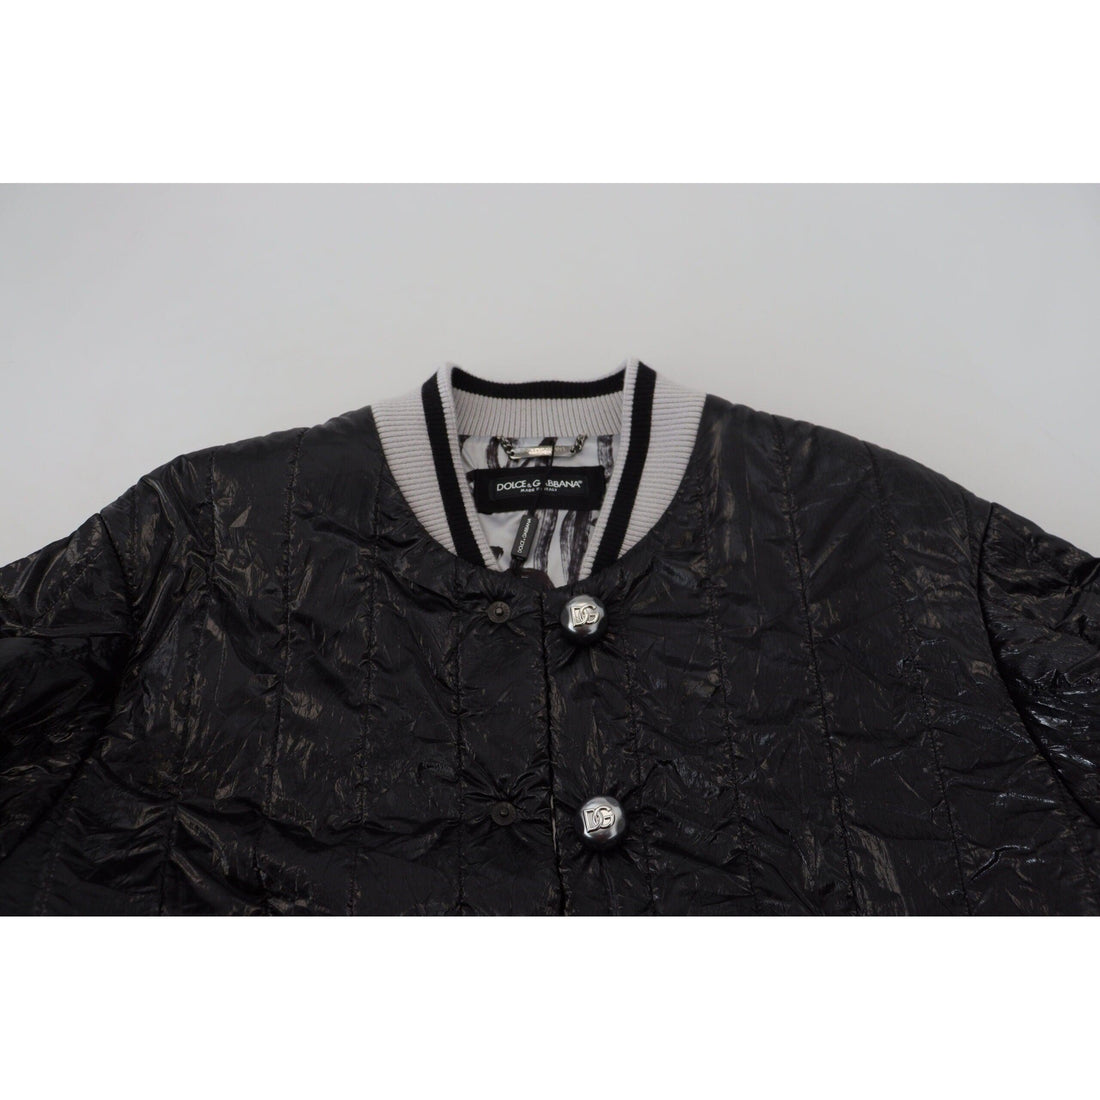 Dolce & Gabbana Sleek Black Bomber Jacket